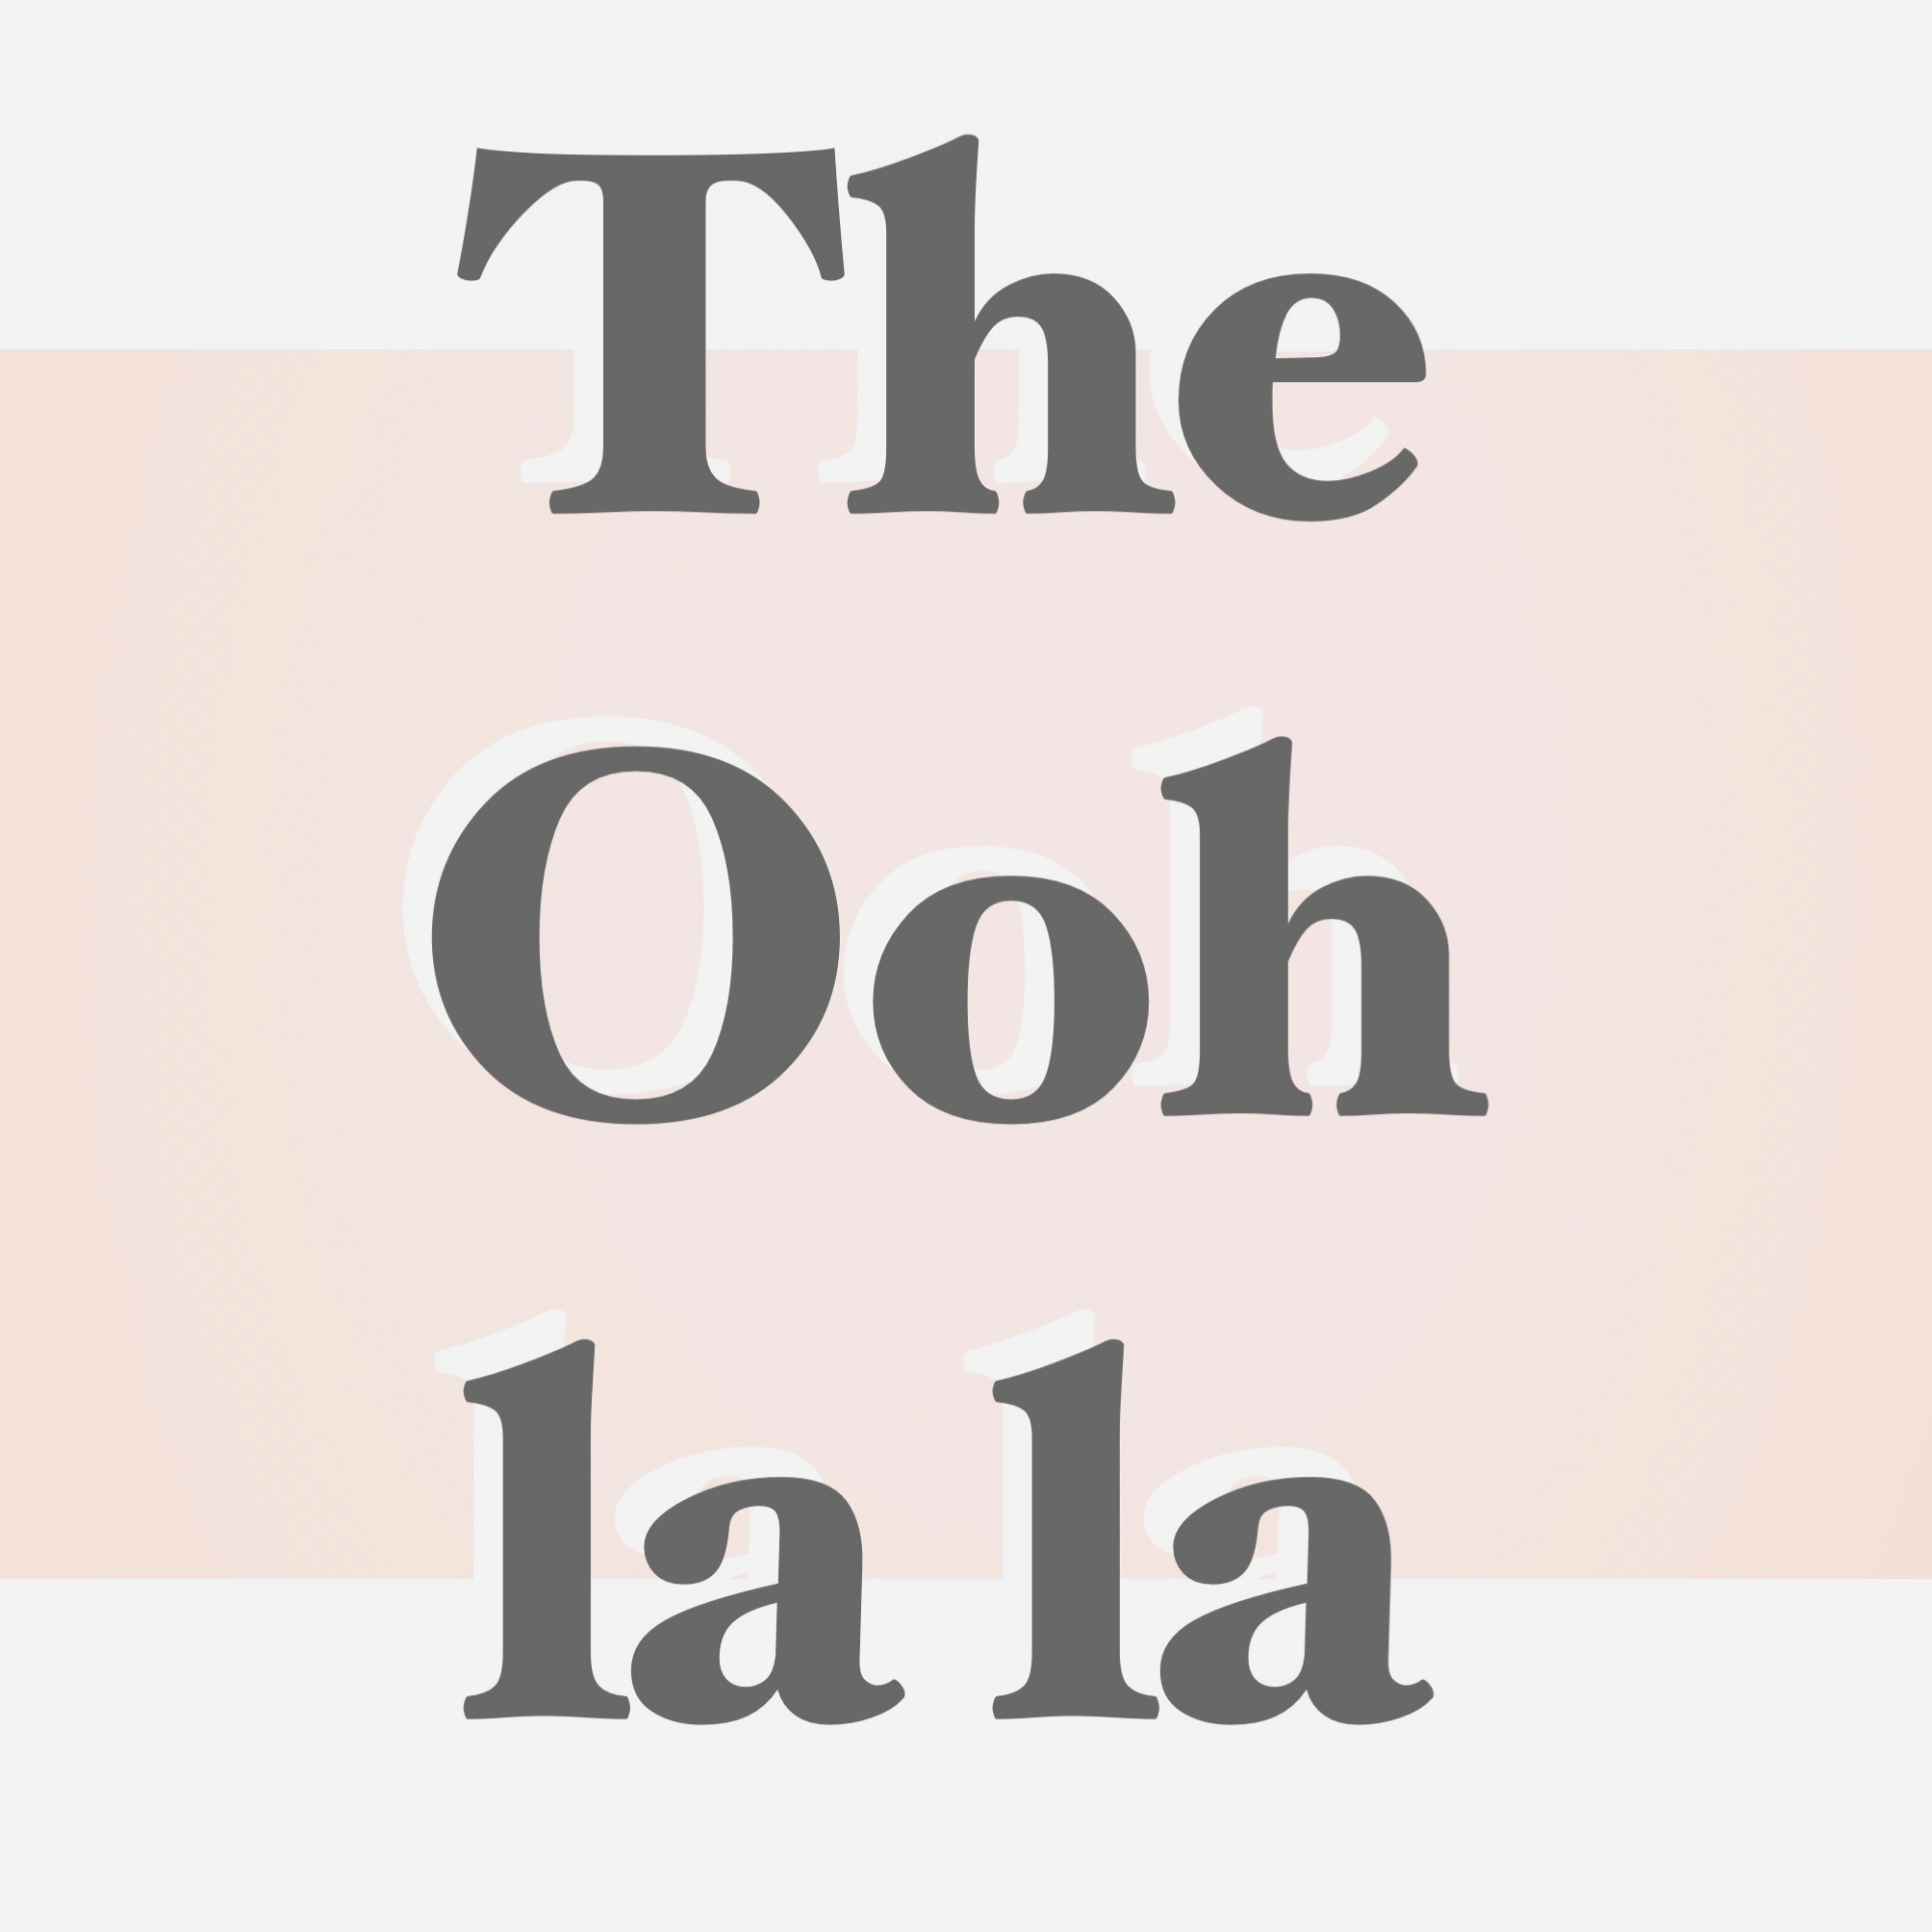 The Ooh La La